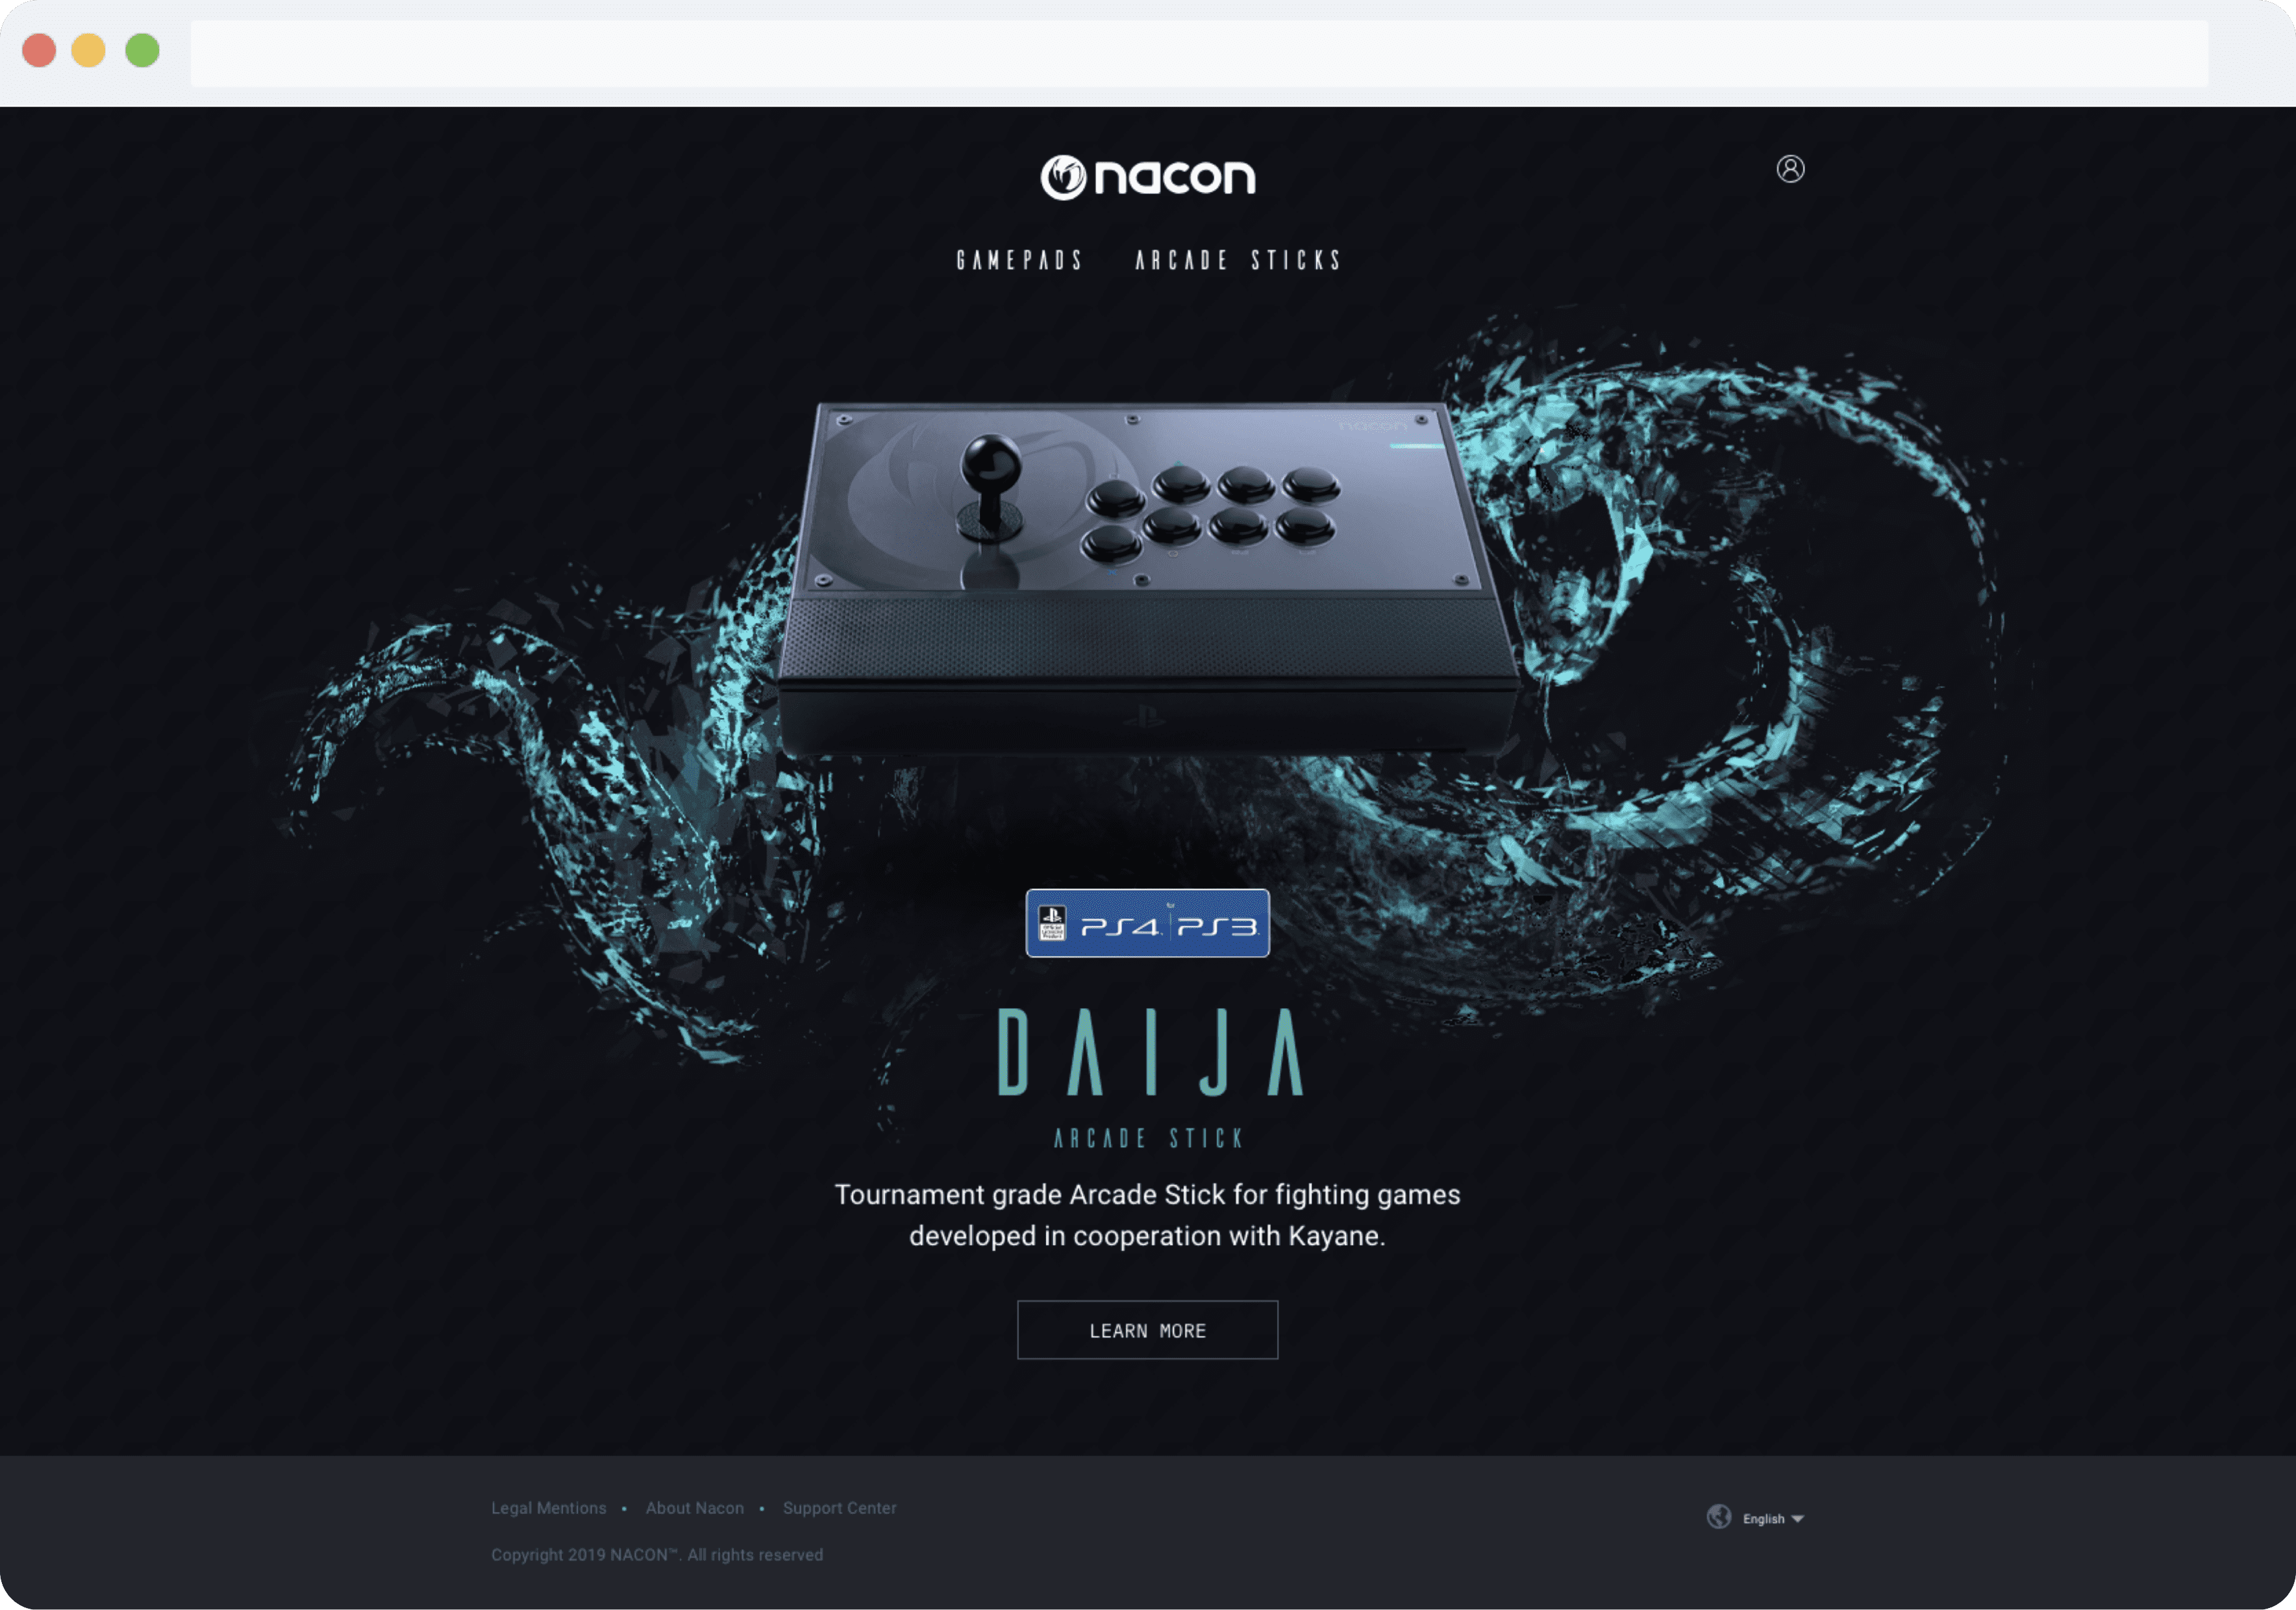 NACON website highlighting its then newest product - Daija Arcade Stick